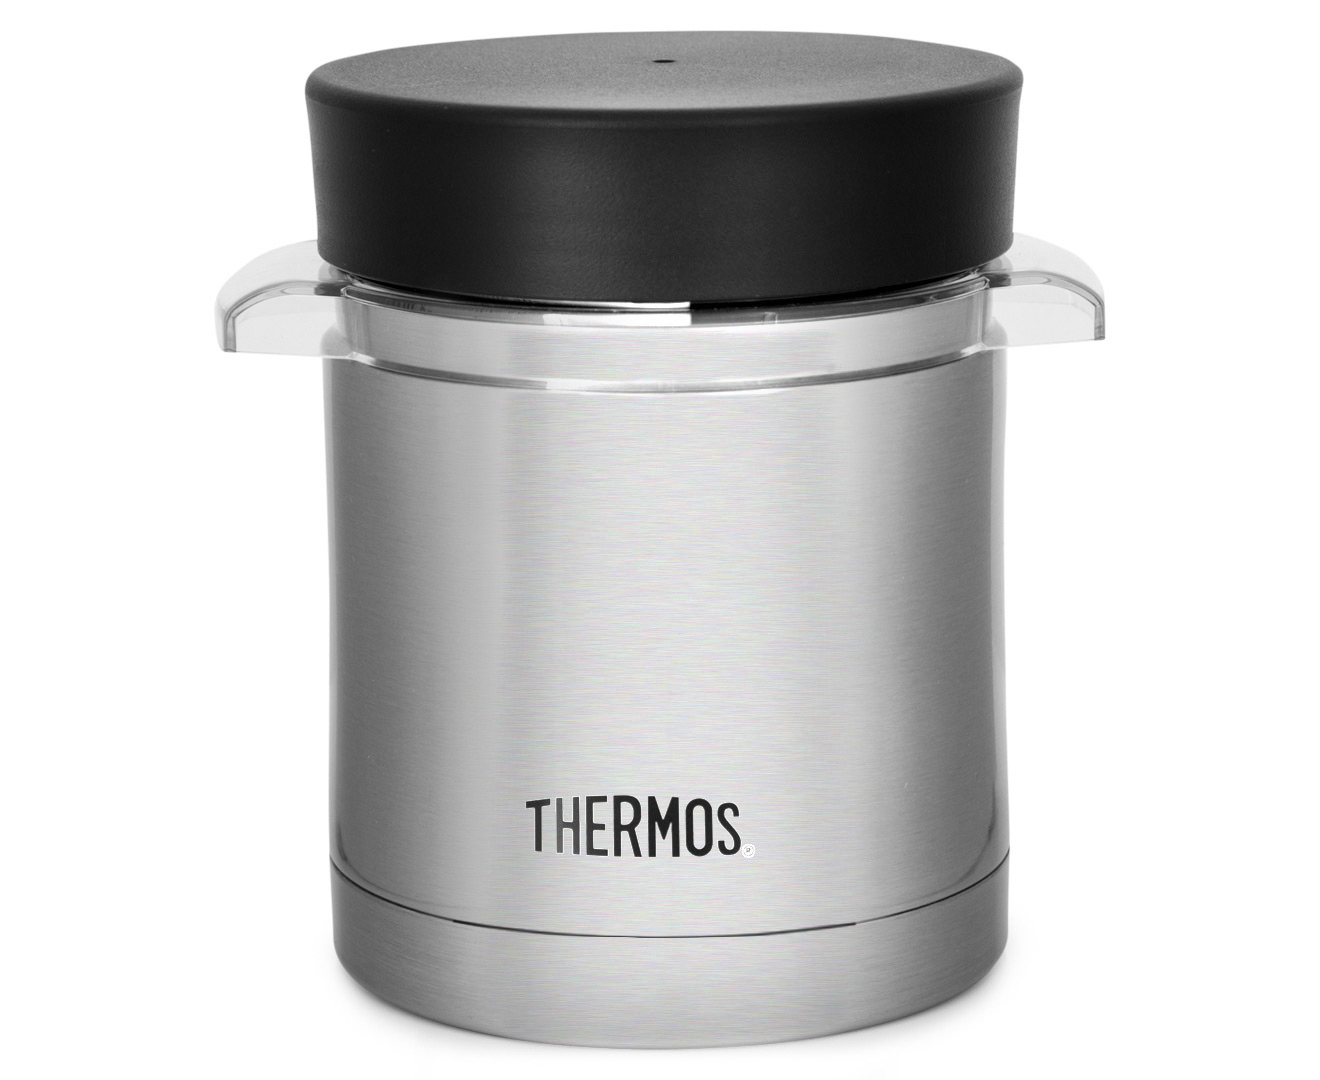 Thermos 355mL Vacuum Insulated Stainless Steel Sleeve w/ Microwavable Food Jar